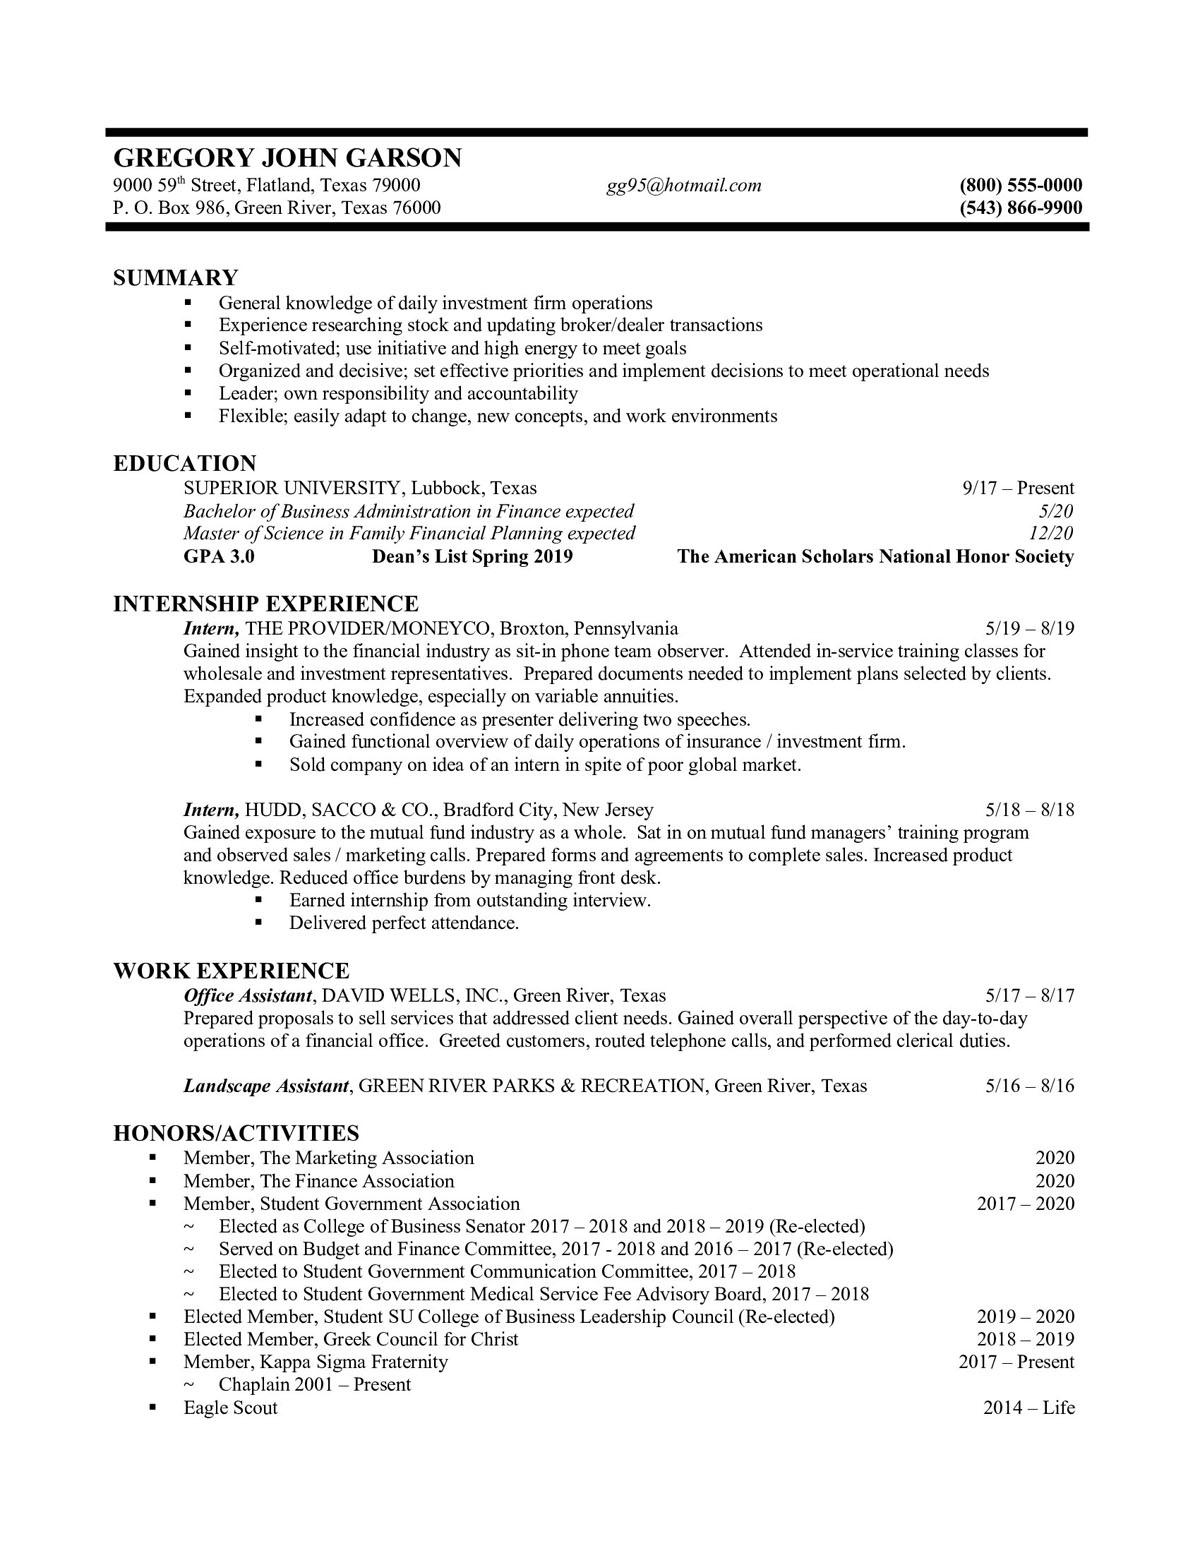 Sample resume: Finance, Internship, Combination